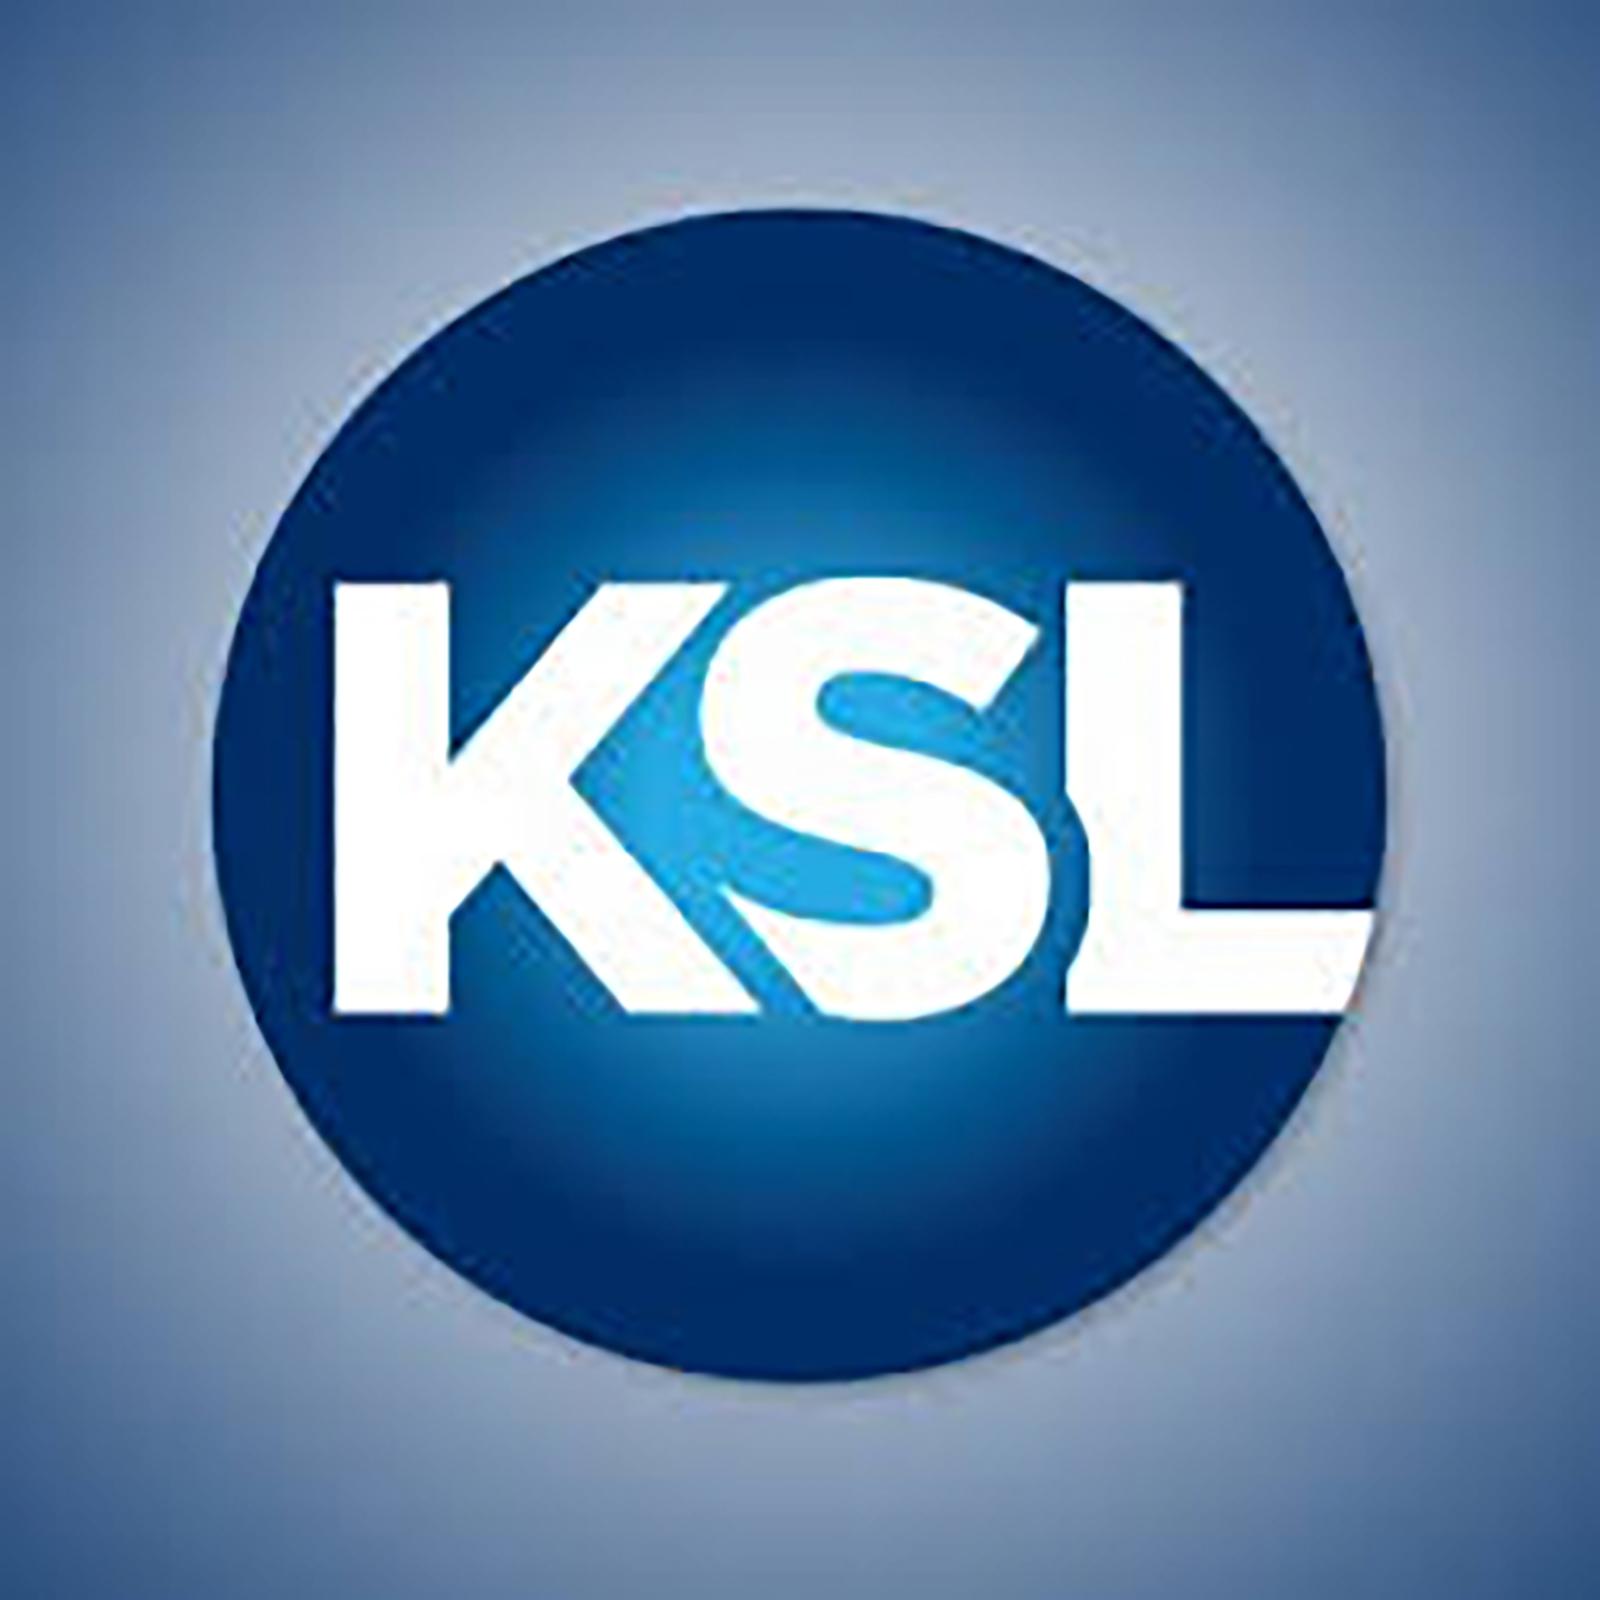 KSL Logo - KSL News at Noon Browser Segment | Digital Smart Media - Utah Advertising  Agency